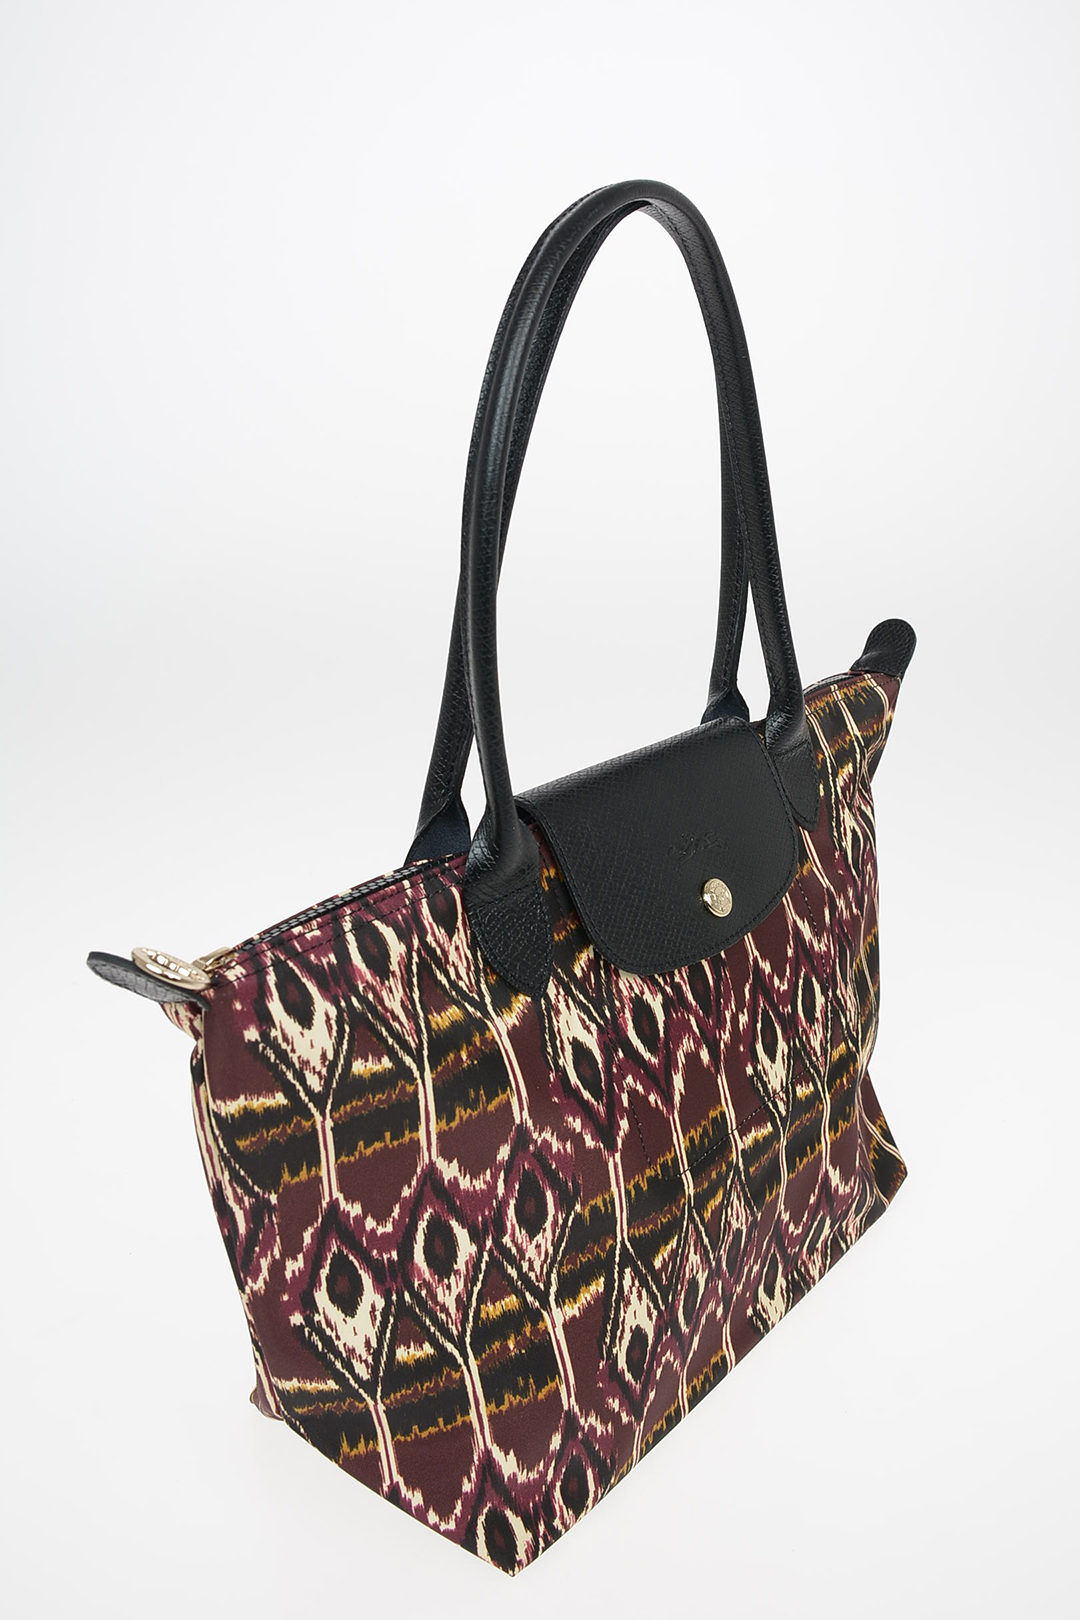 Longchamp Printed Fabric Tote Bag women - Glamood Outlet